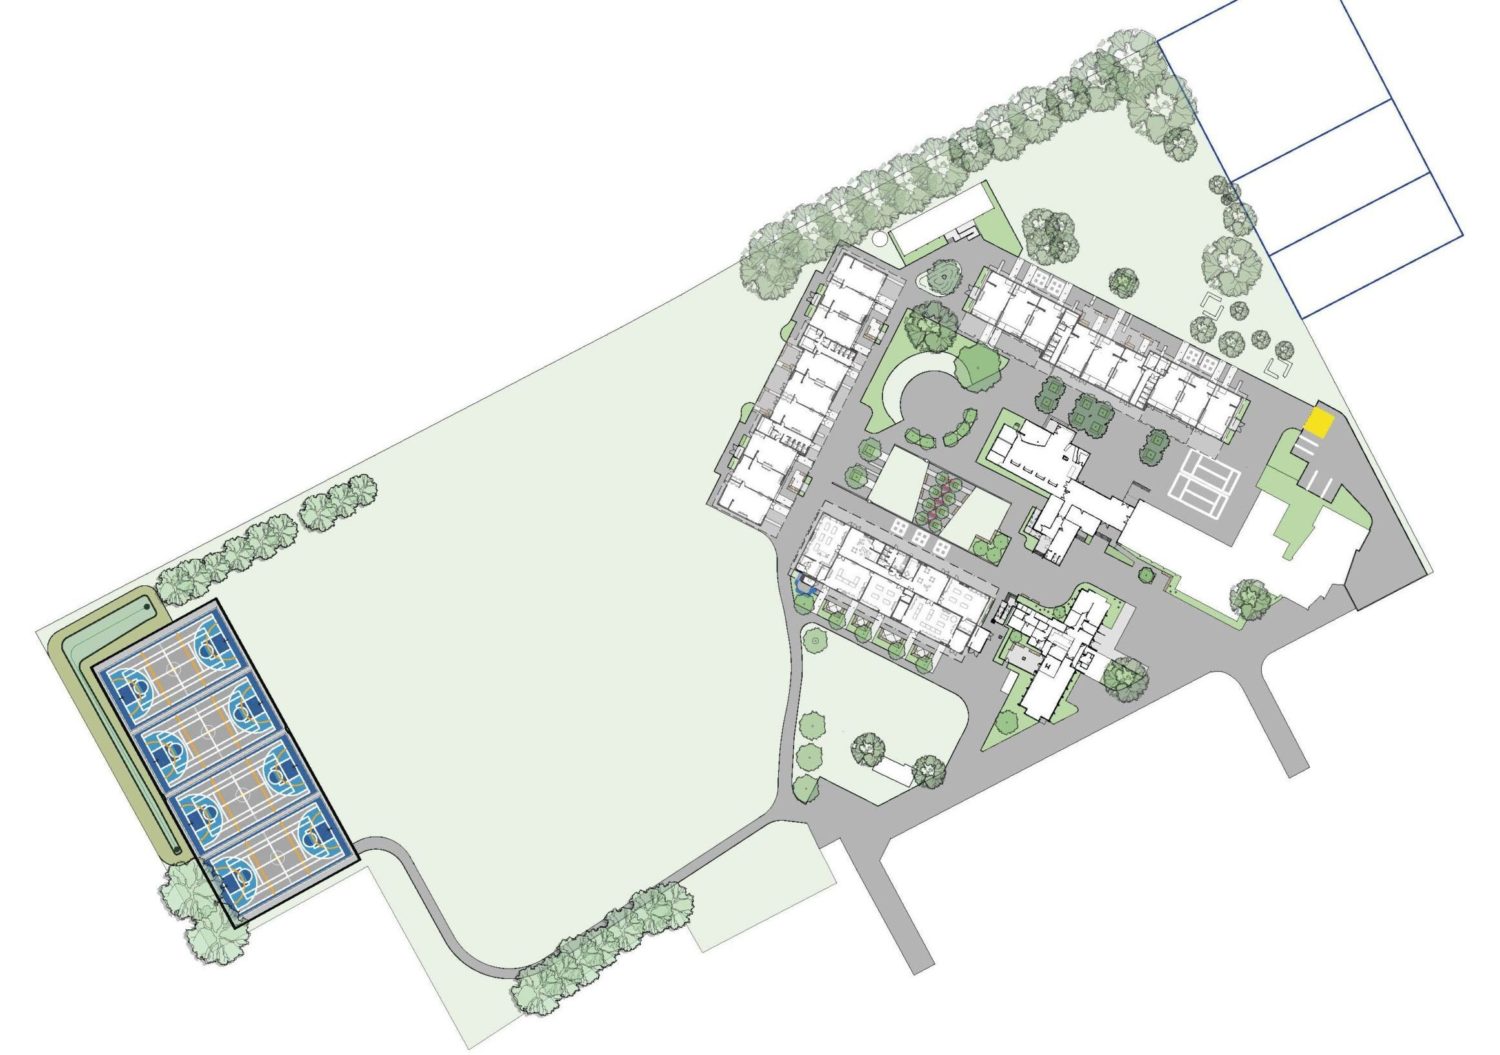 He Tīwai Mātauranga, Heaton Normal Intermediate School – Landscape Design cover image